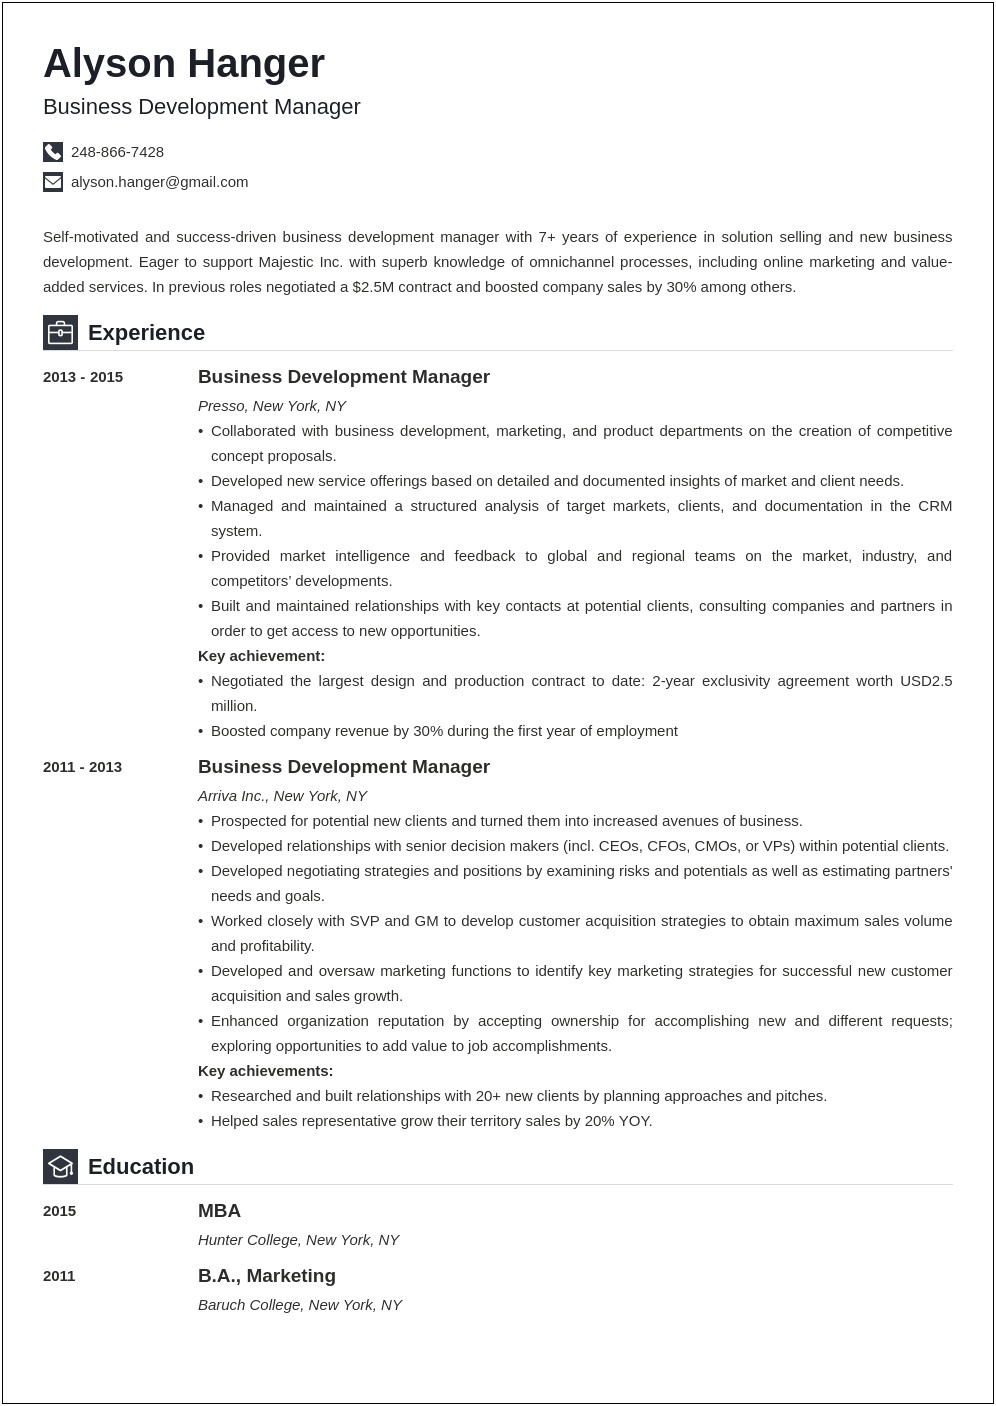 Business Development Manager Summary Resume